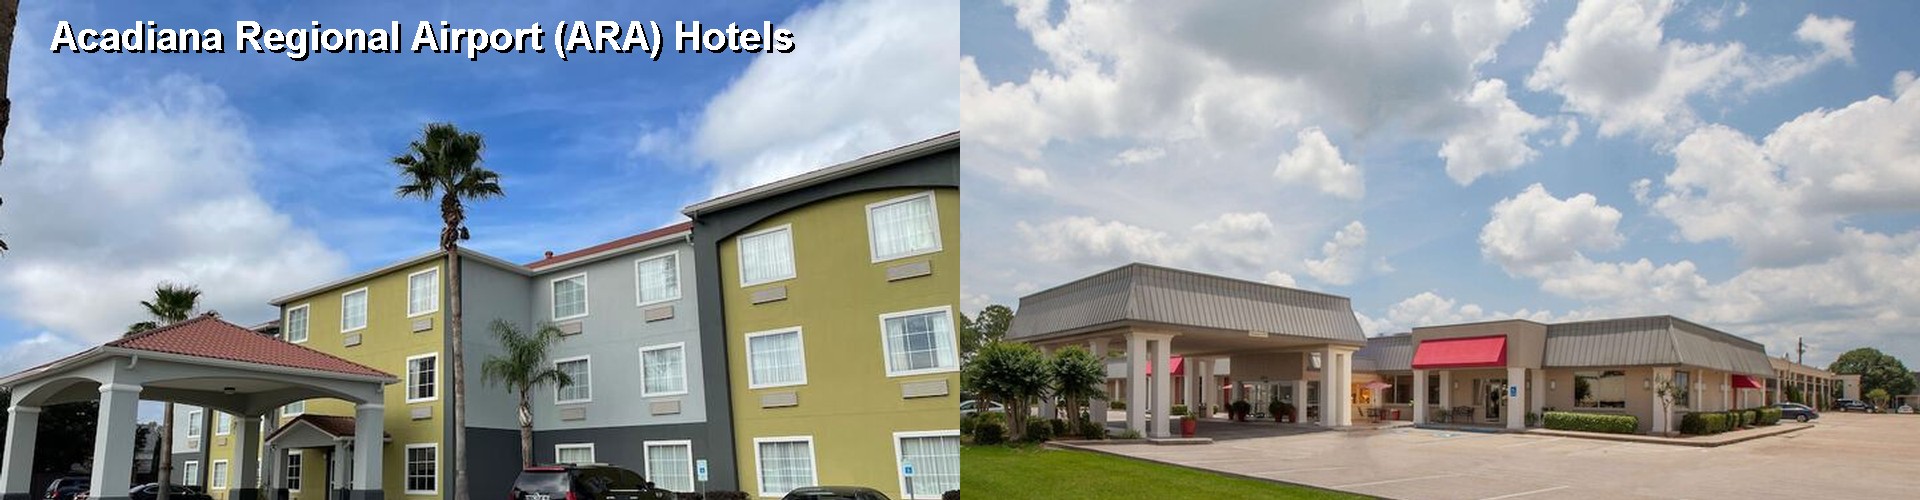 3 Best Hotels near Acadiana Regional Airport (ARA)